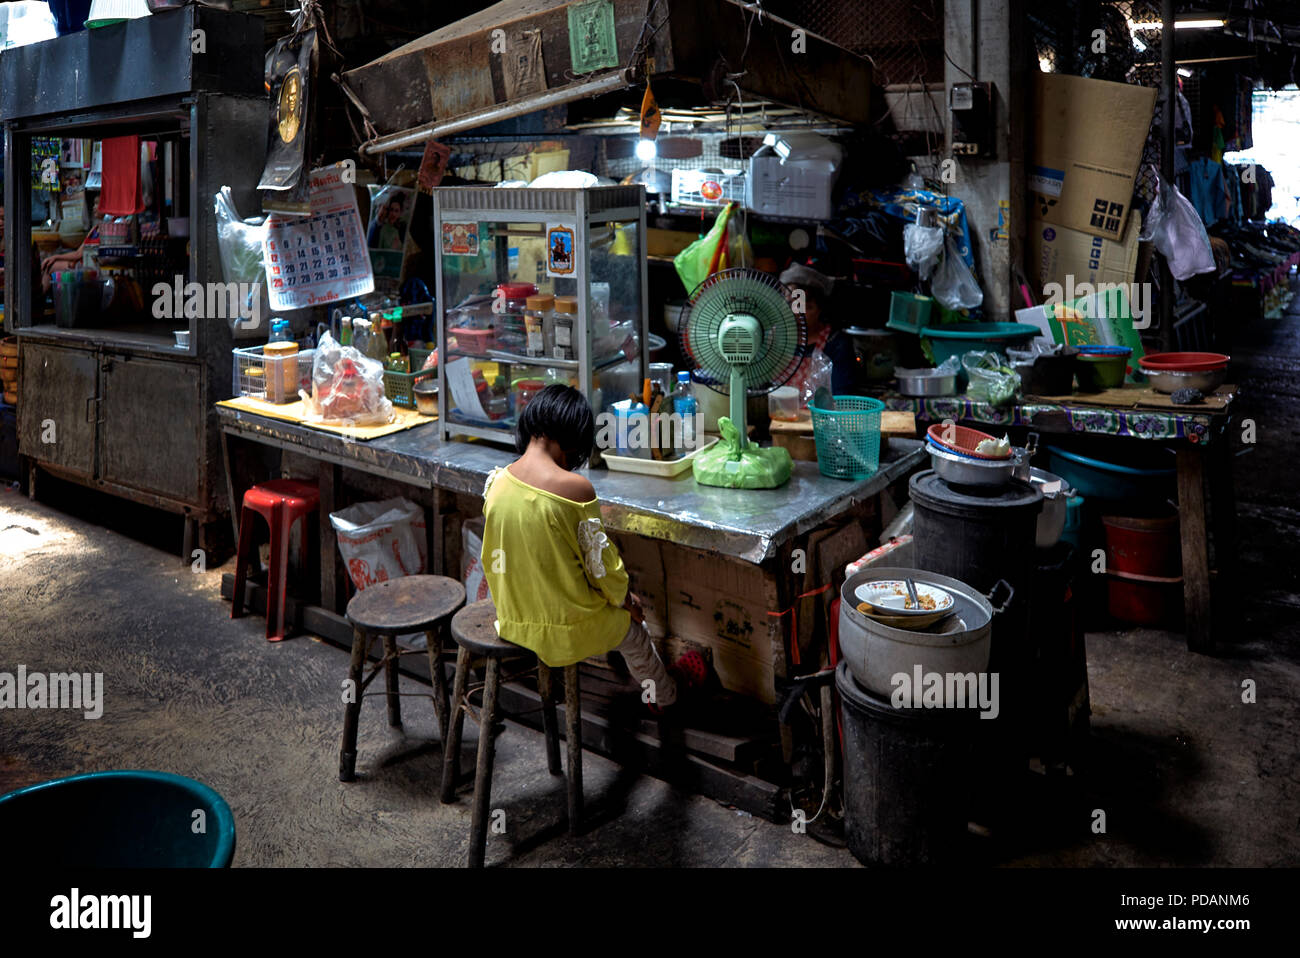 Child alone at a dimly lit Thailand market back street stall. Stock Photo